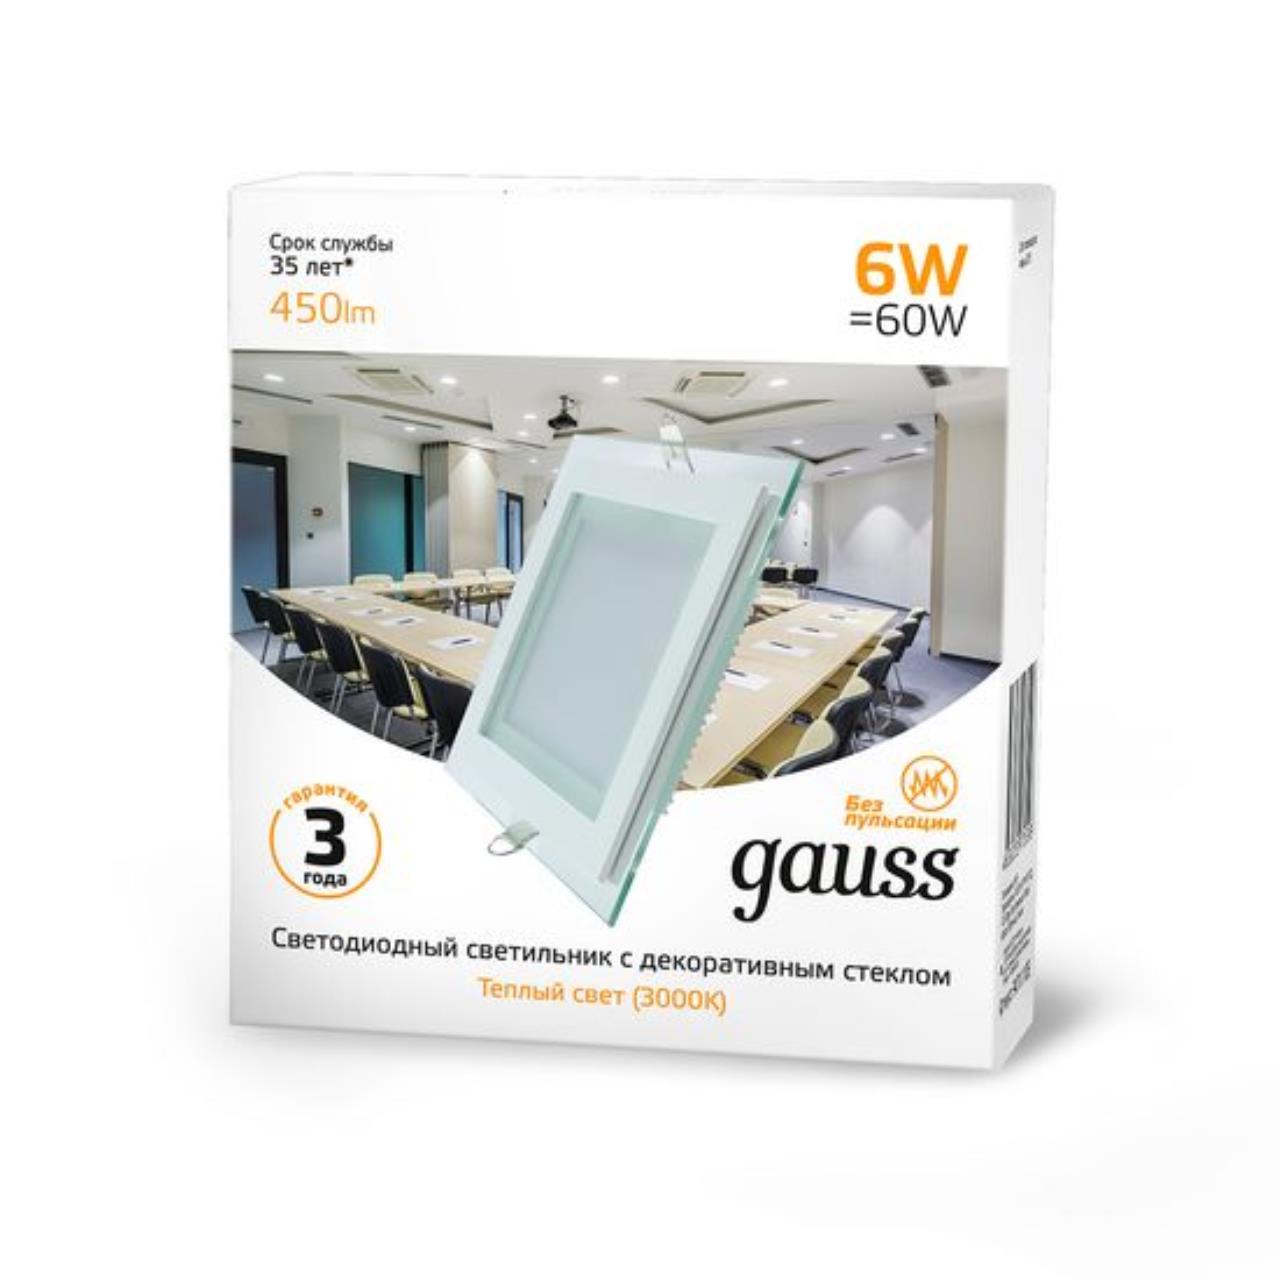 Светильник Gauss Glass кв 6W 450lm 3000K 220-240V IP20 монт Ø70х70 100*100*35 с дек стеклом LED 1/40